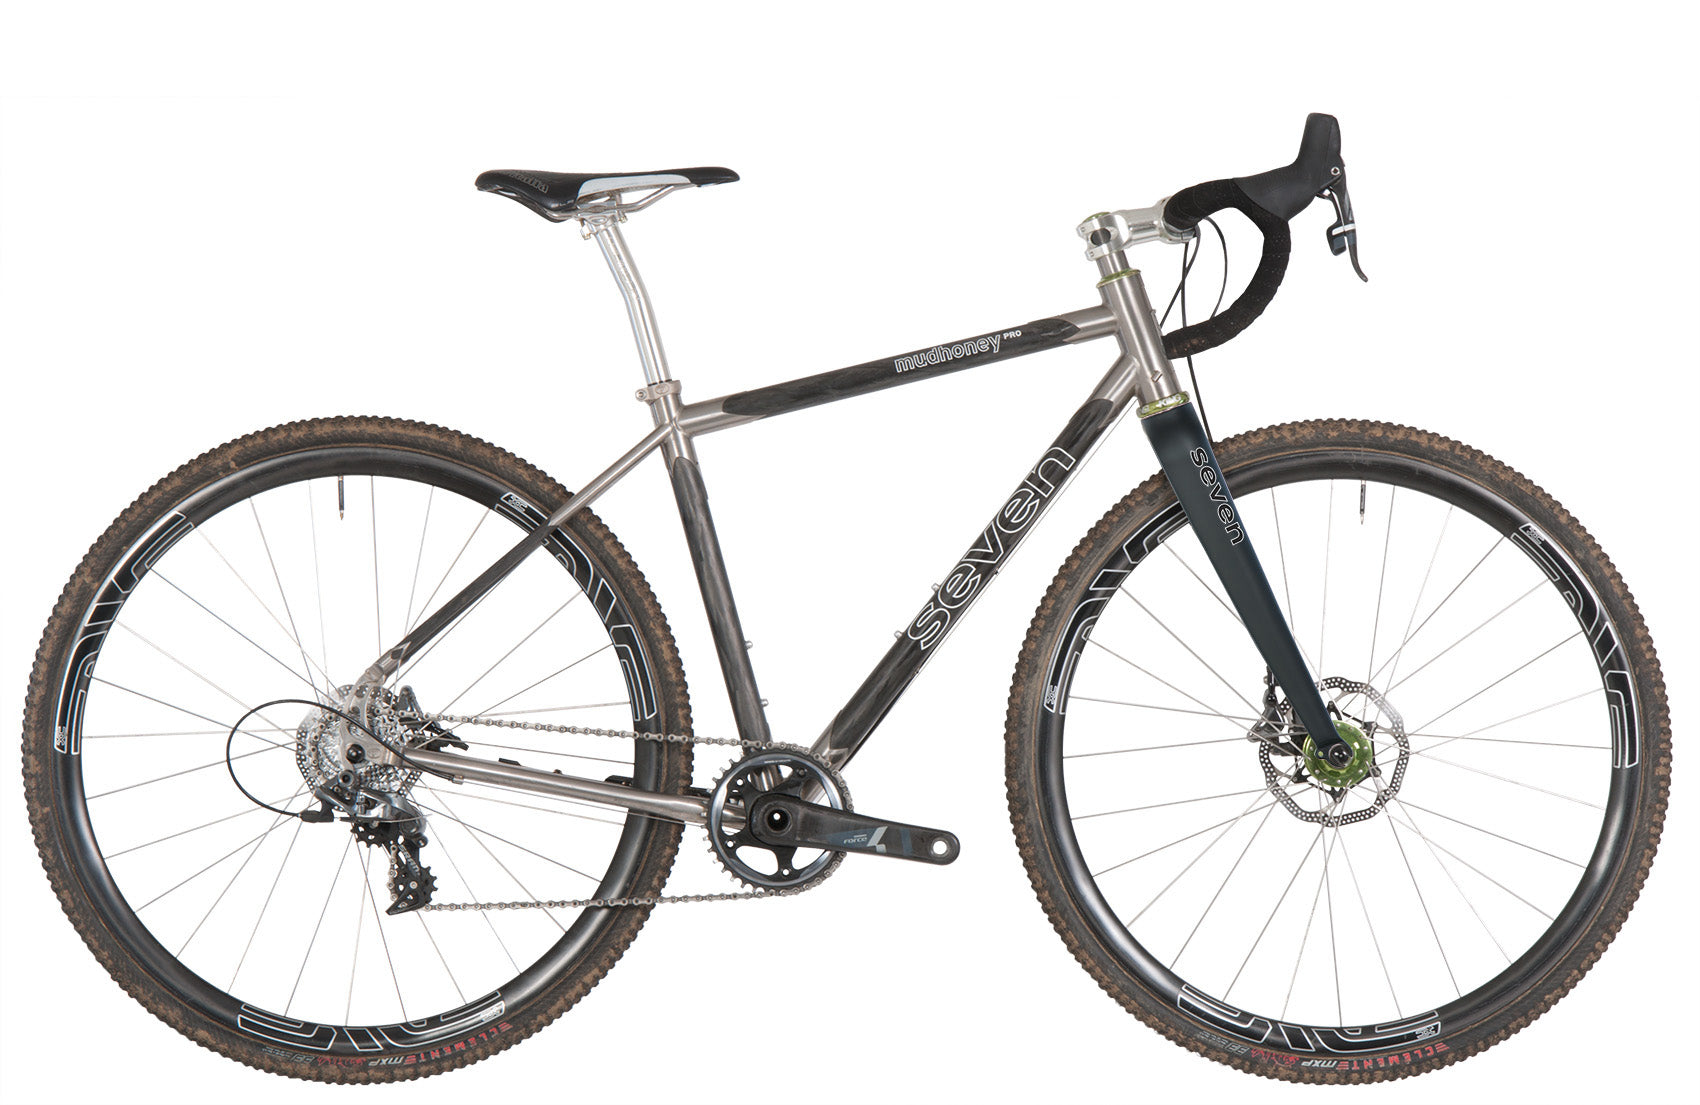 Titanium/Carbon Cyclocross Bicycles Model / Mudhoney